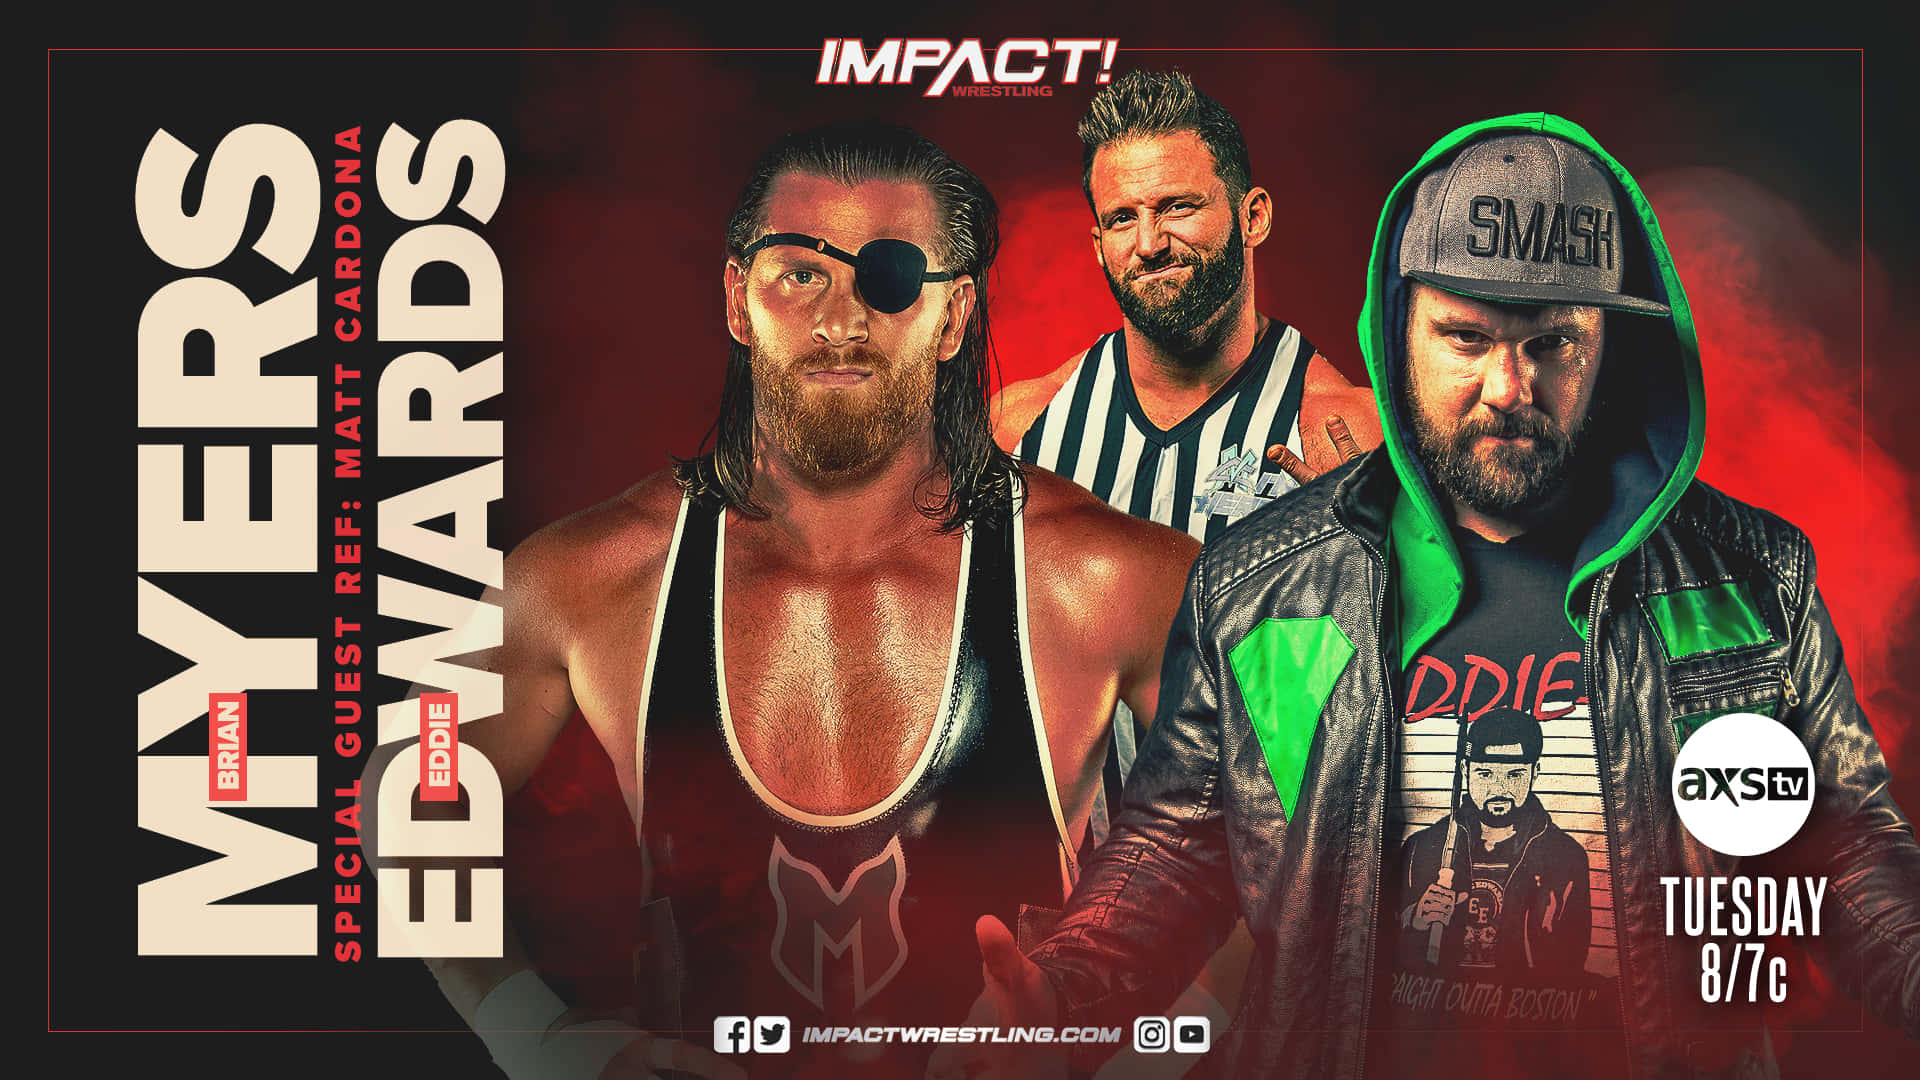 Wrestling Showdown – Eddie Edwards Vs Brian Myers Poster Wallpaper